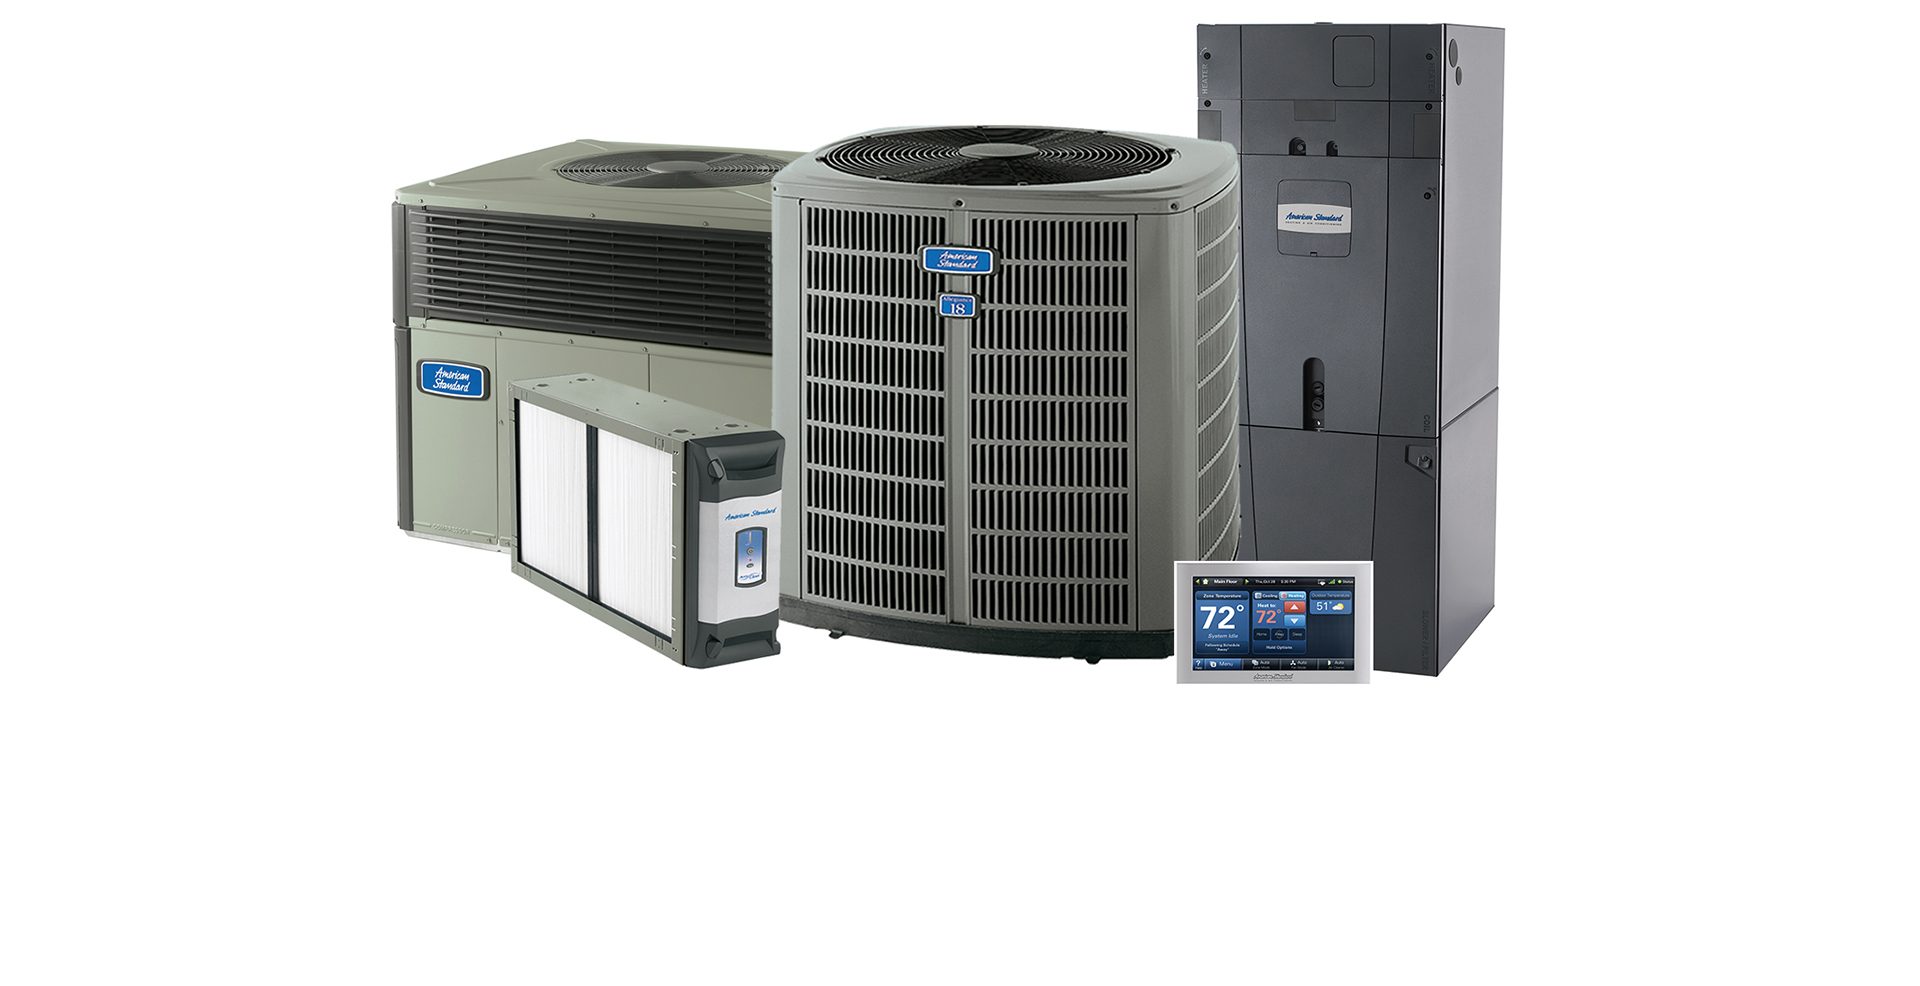 American Standard brand of air conditioning equipment dealer, HVAC Equipment family photo